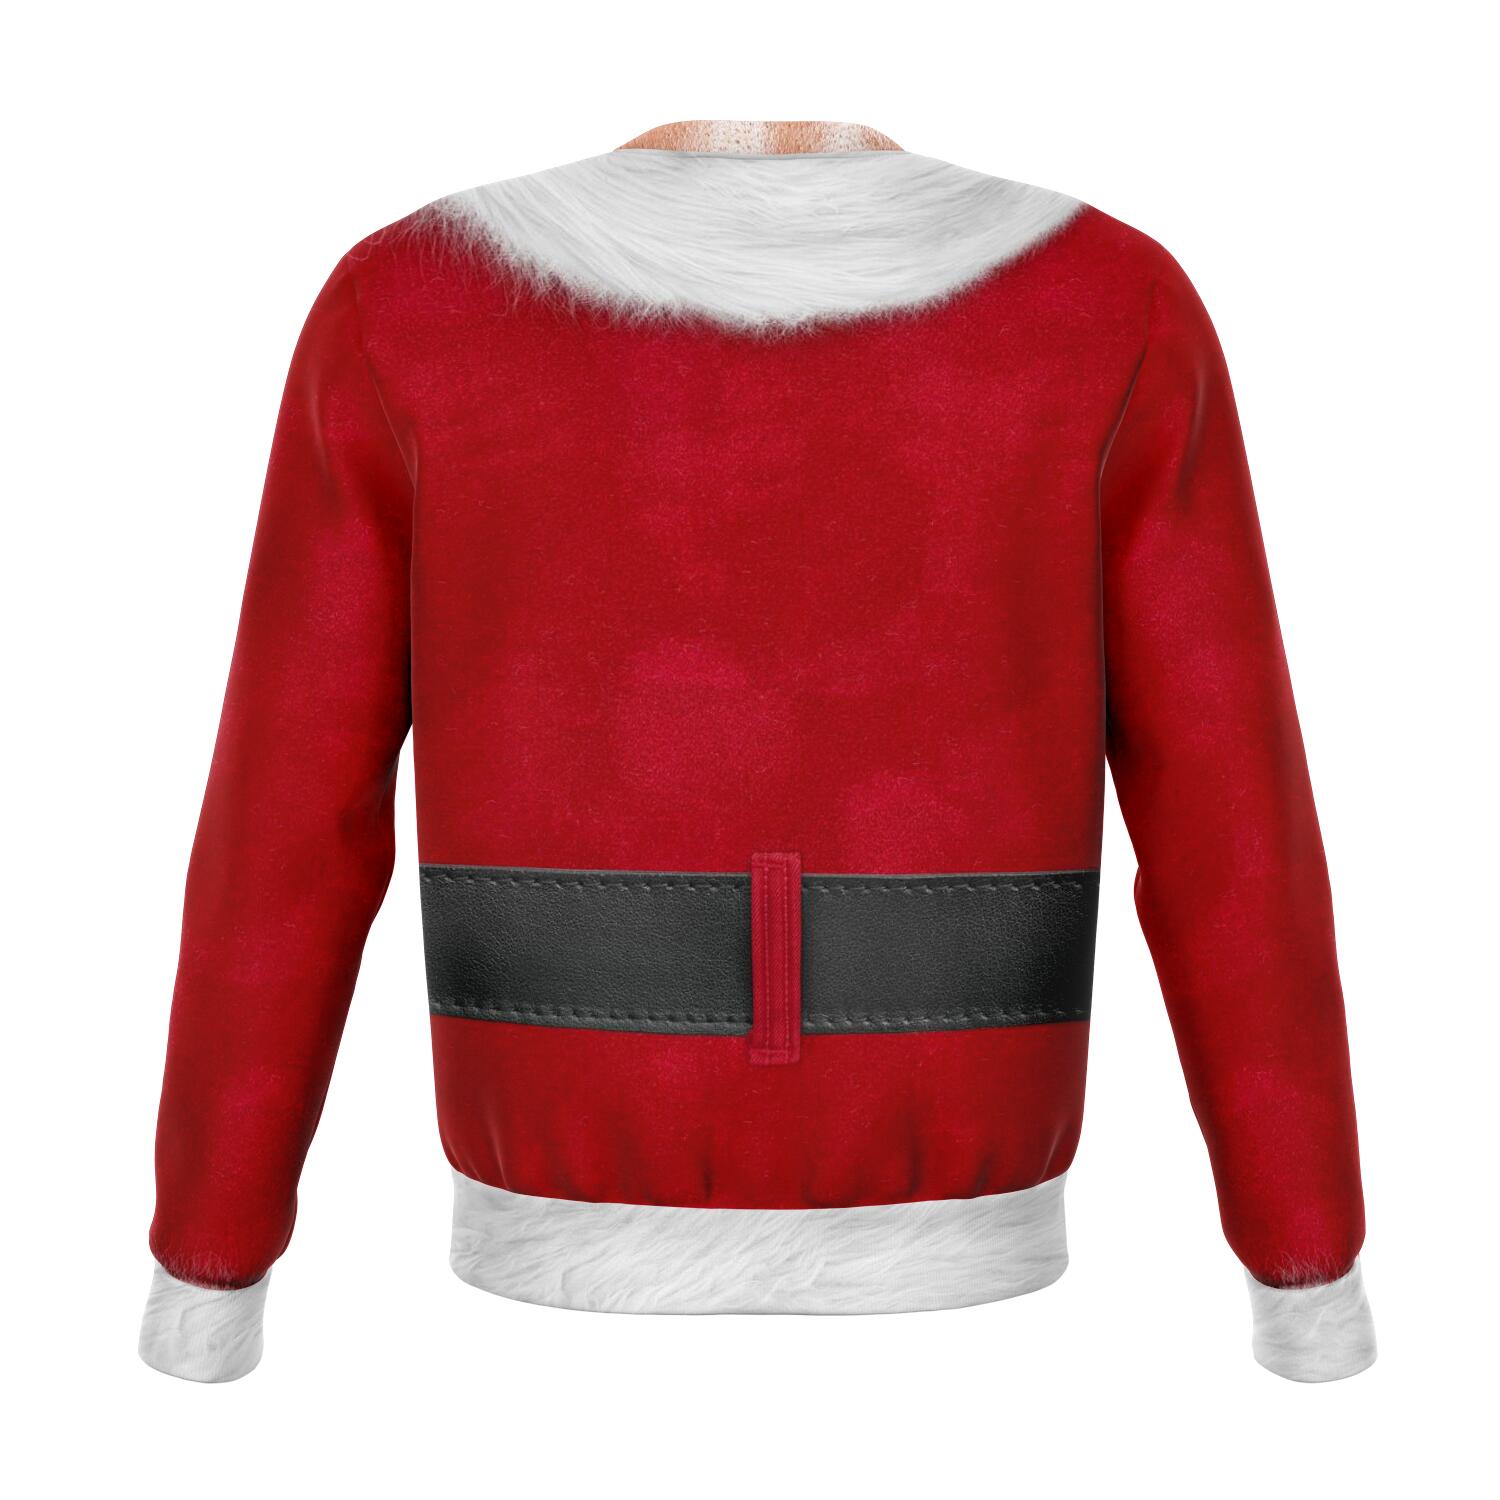 Sexy Santa Light Skin Christmas Crewneck Sweatshirt